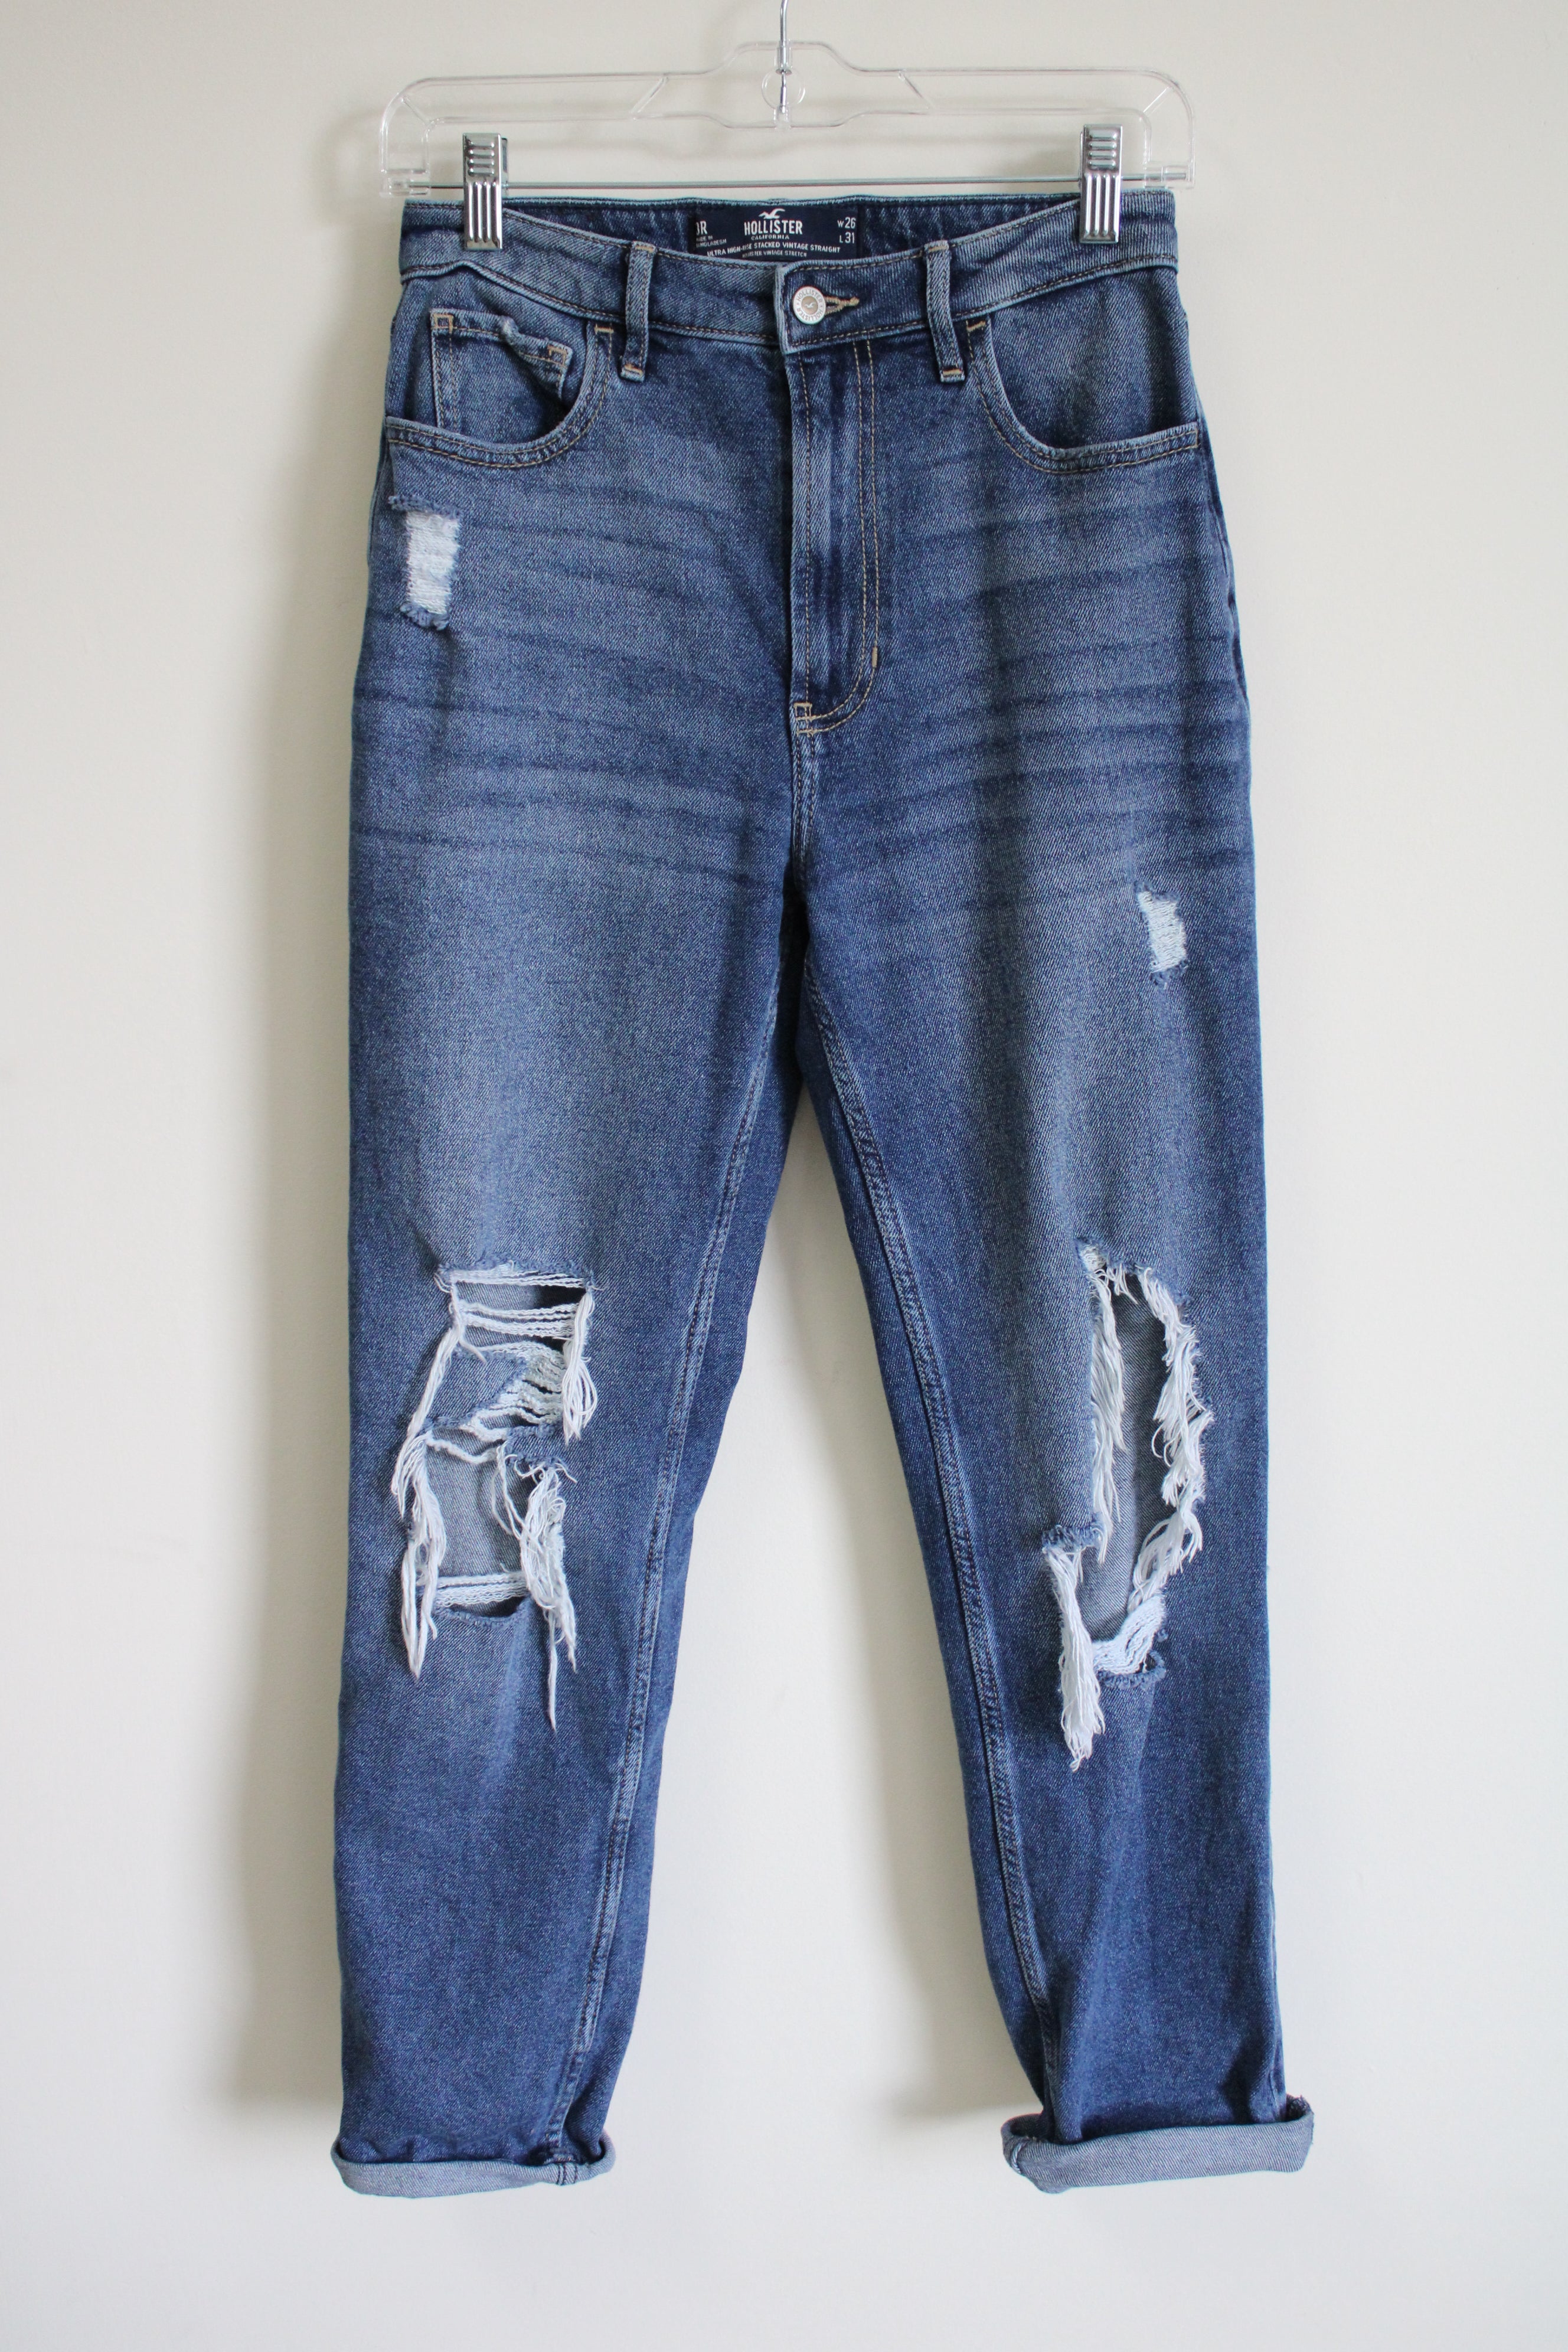 Vintage Women's Hollister HCO Super Flare Jeans Mid Rise Size 7R (32x32)